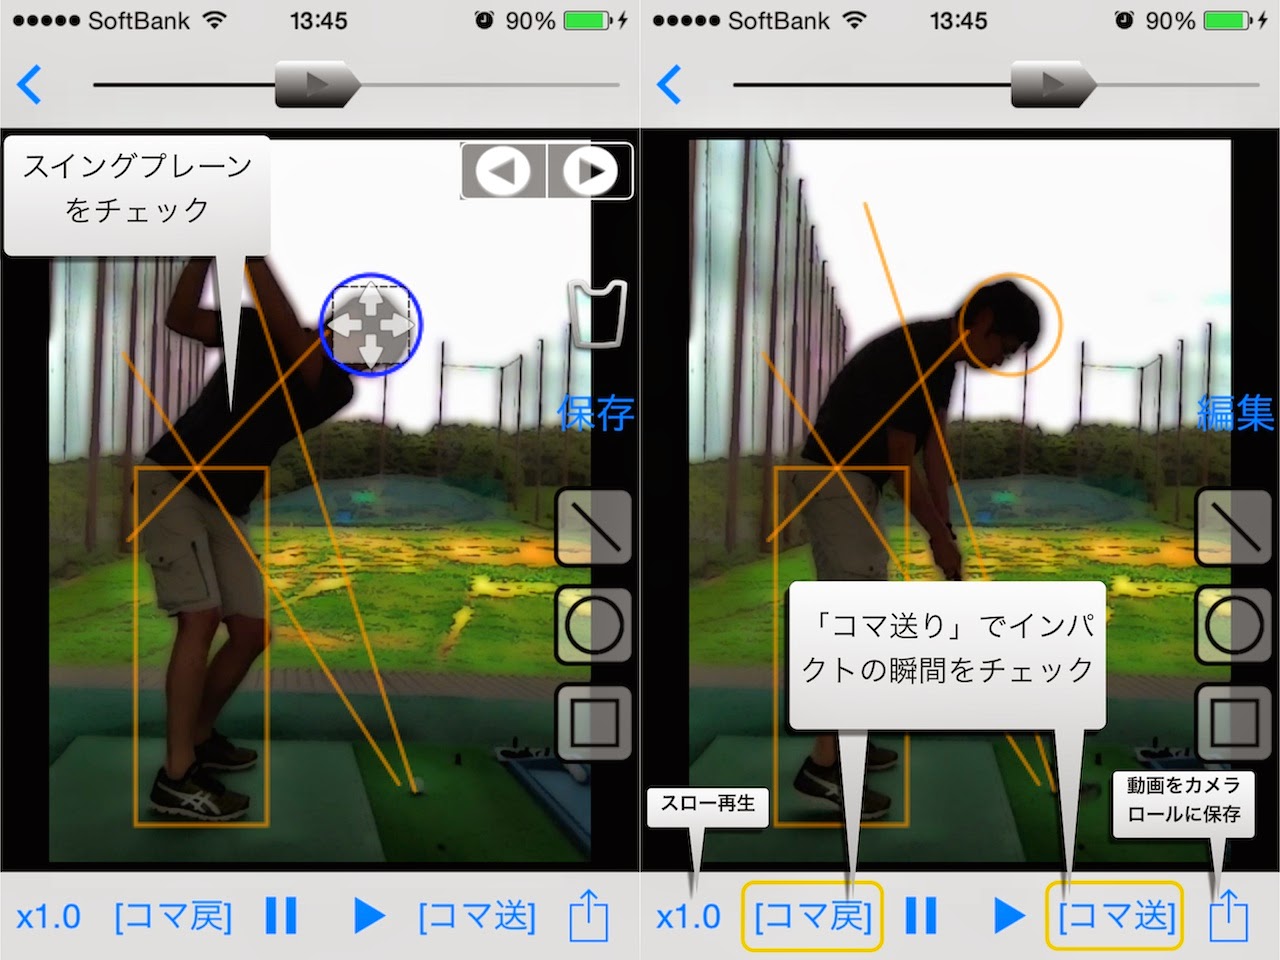 Swing Managerアプリ iPhone/iPad [日本語]1280 x 960